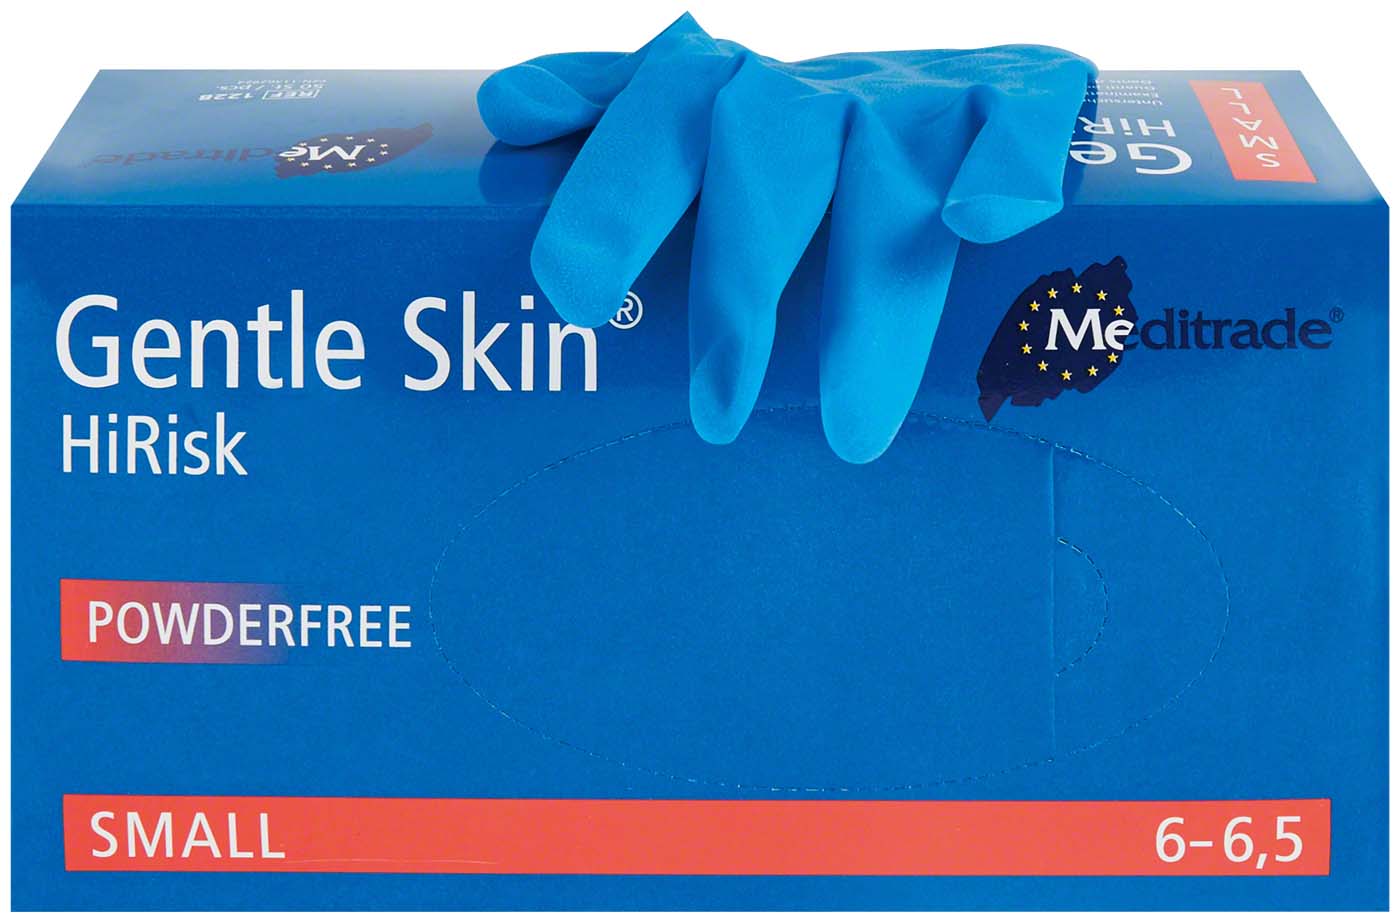 Gentle Skin® HiRisk Meditrade